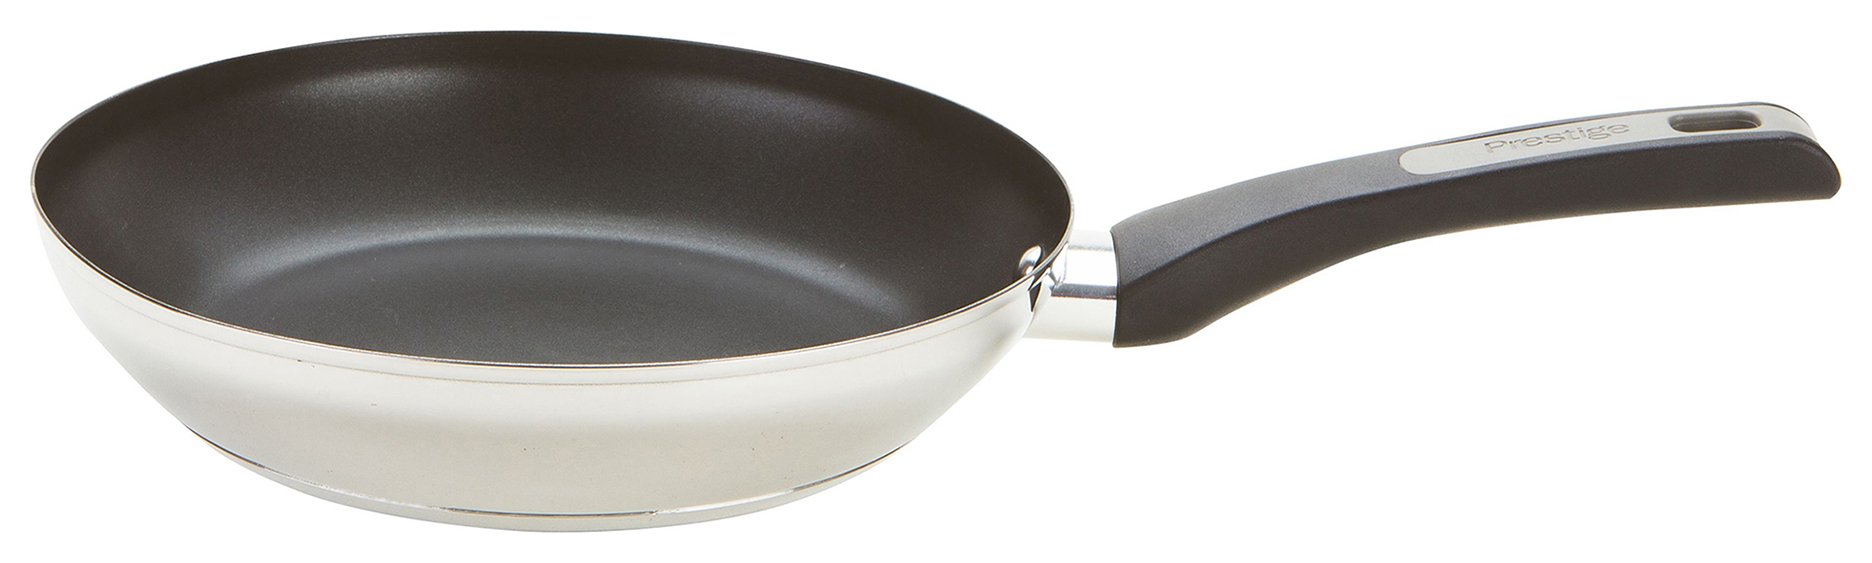 Prestige DuraSteel 24cm Non-Stick Frying Pan